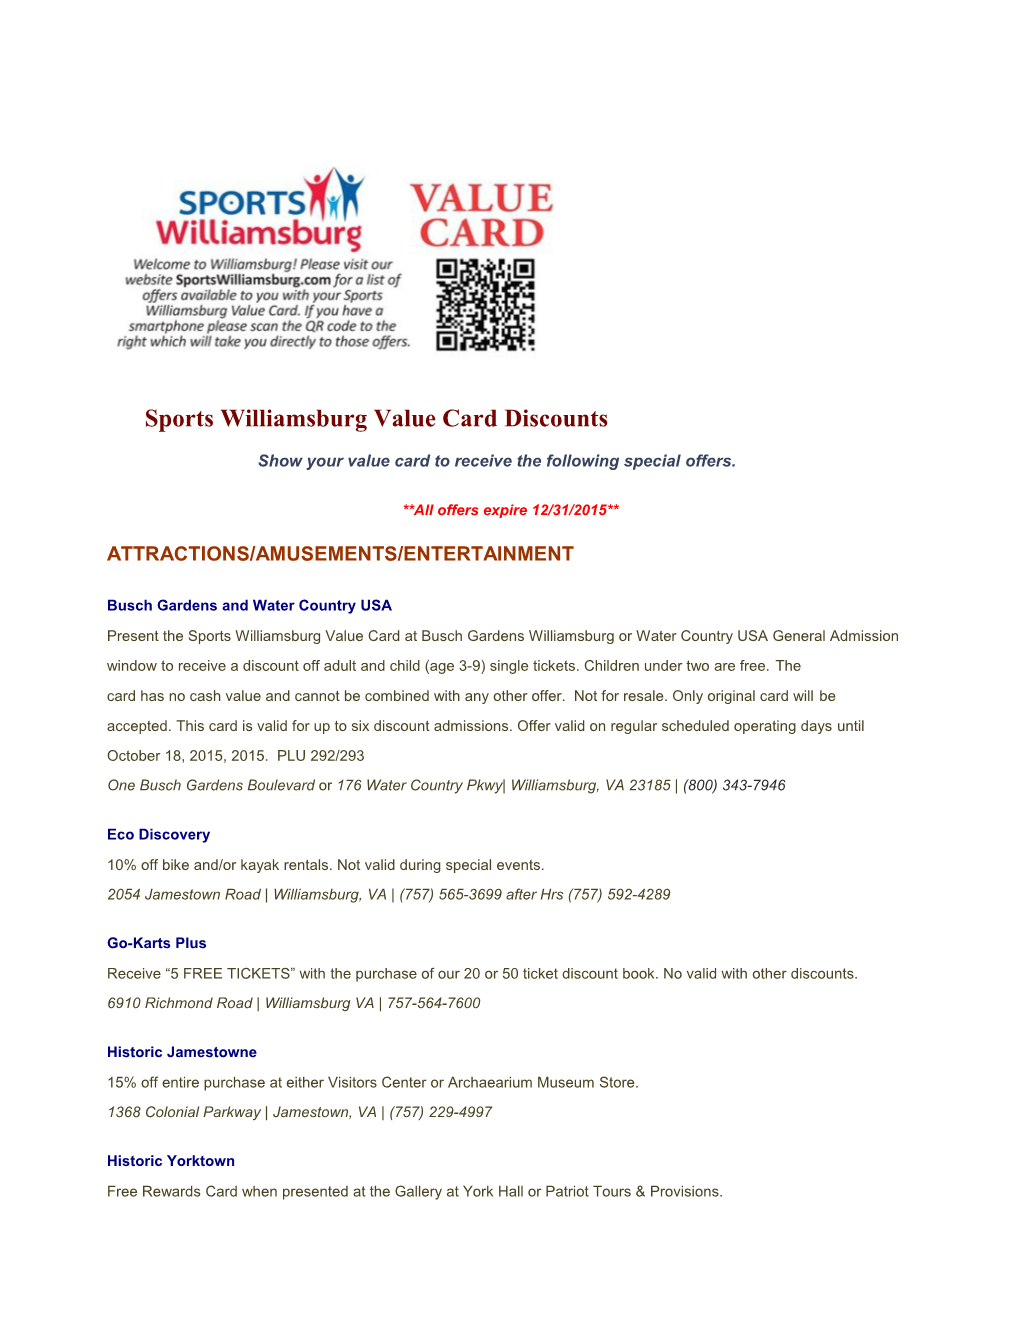 Sports Williamsburg Value Carddiscounts